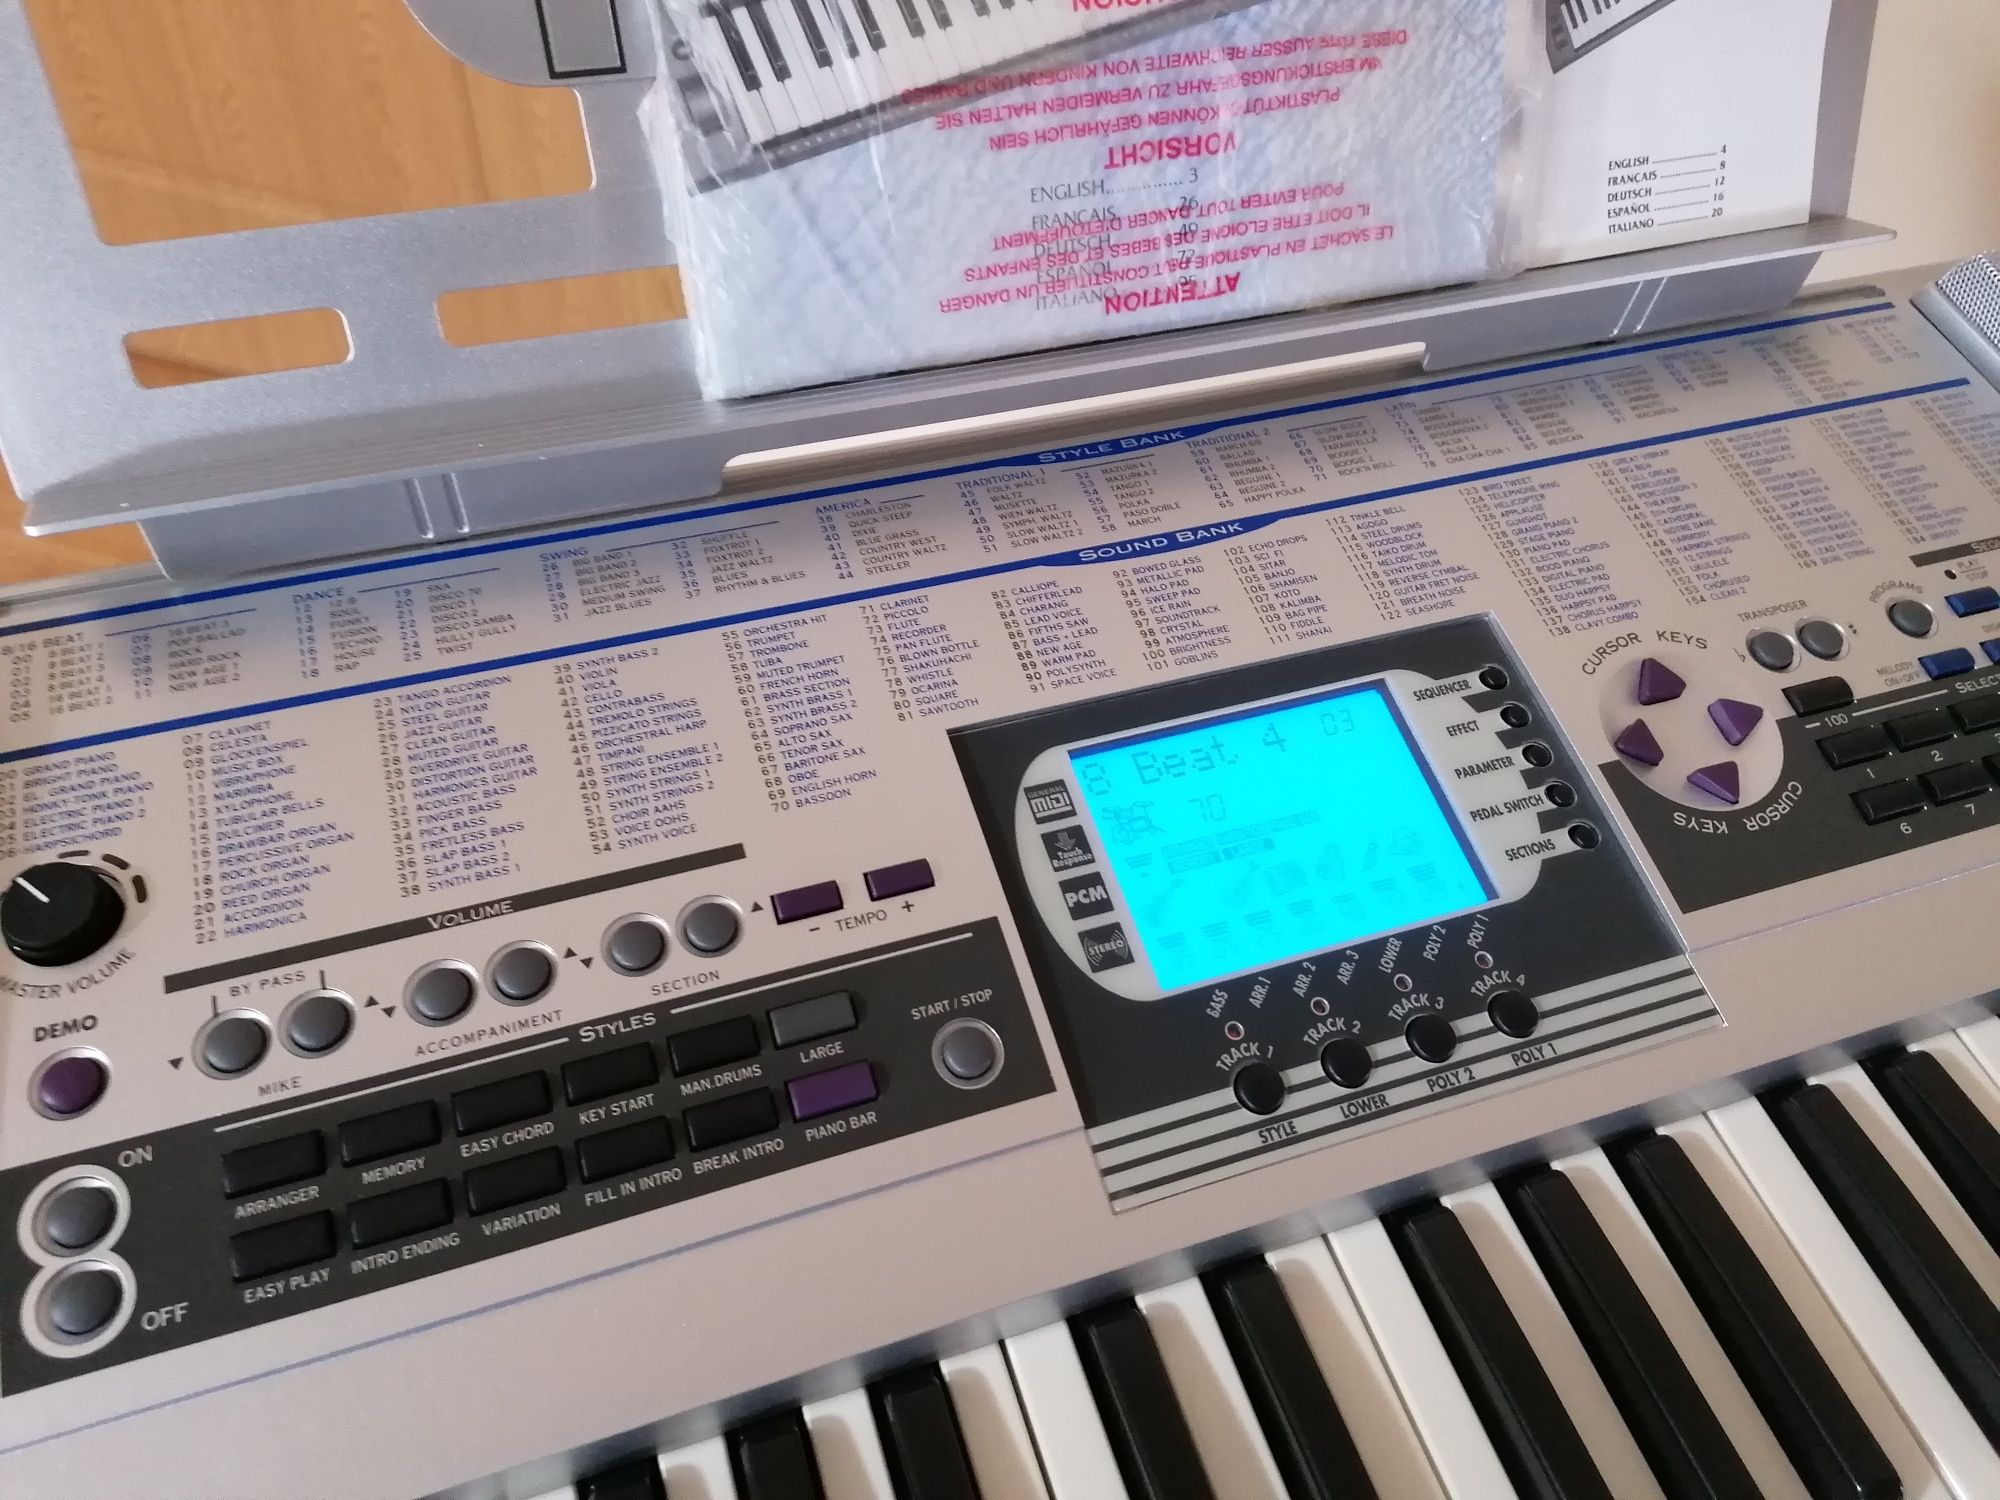 FARFISA TK-88 Disketa profesional pian digital orga keyboard